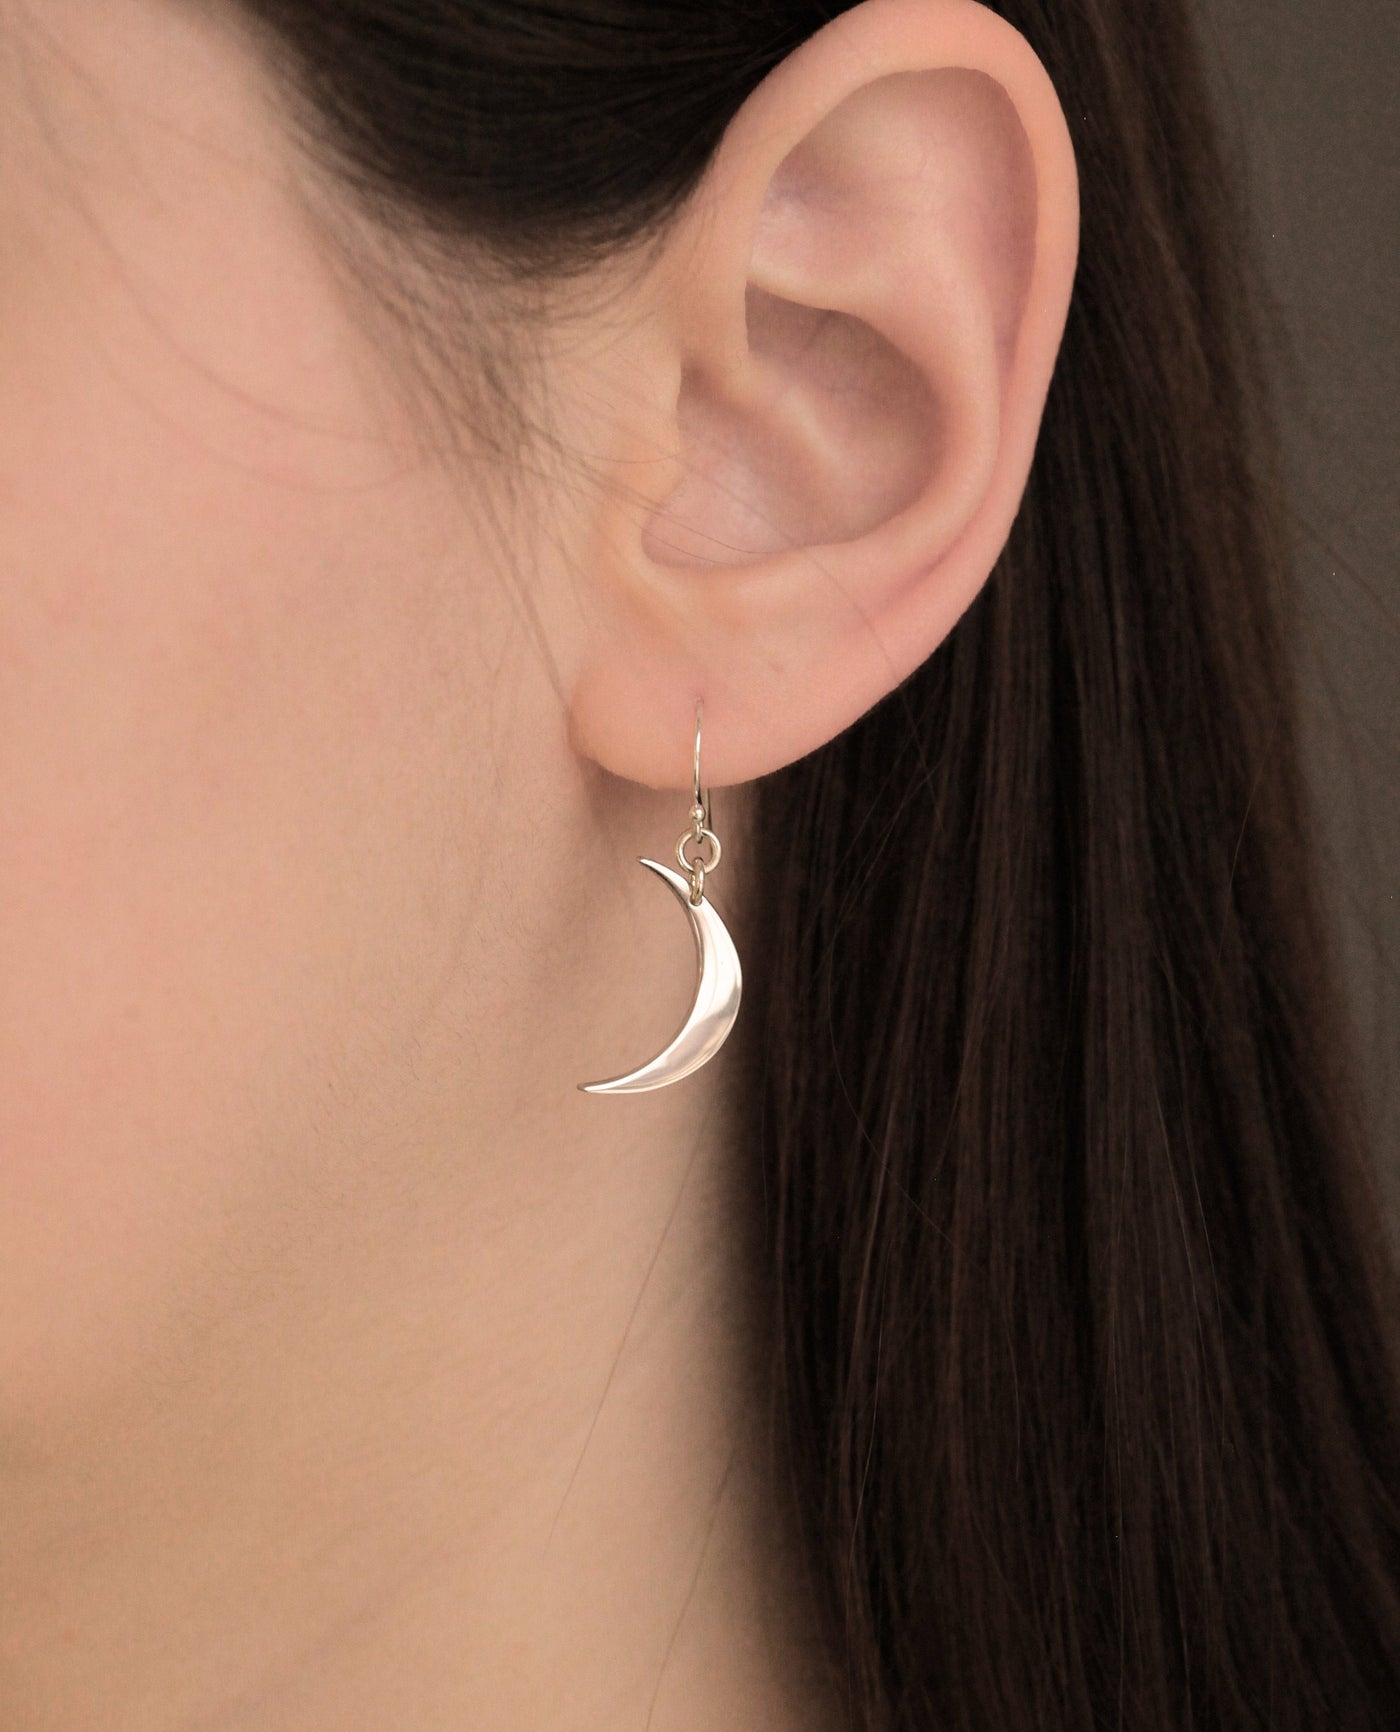 Silver crescent moon stud earrings